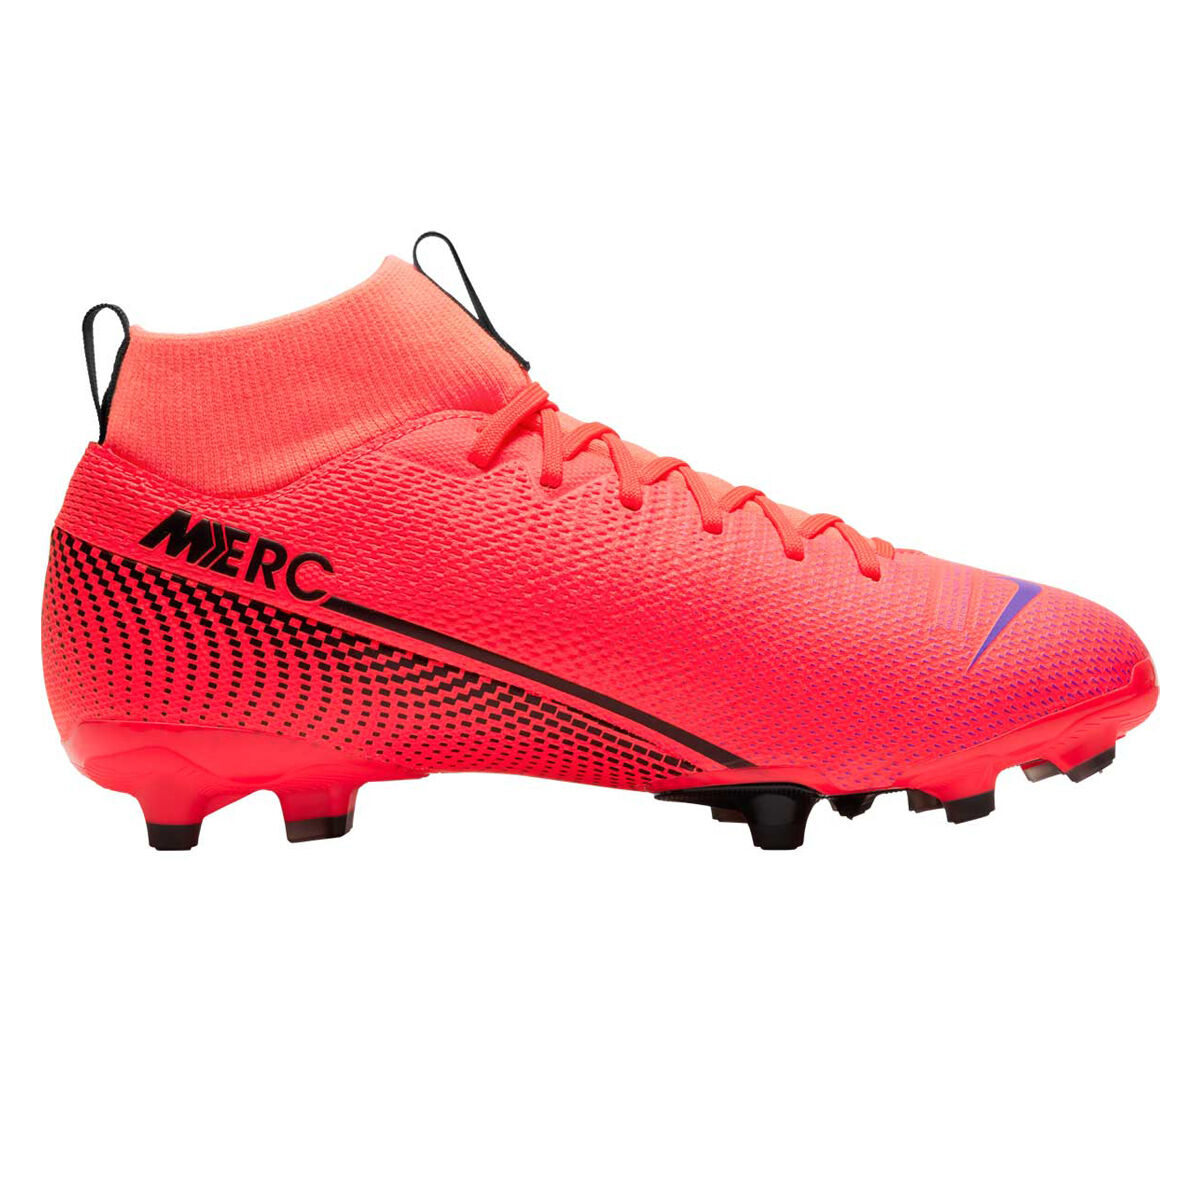 cr8 football boots